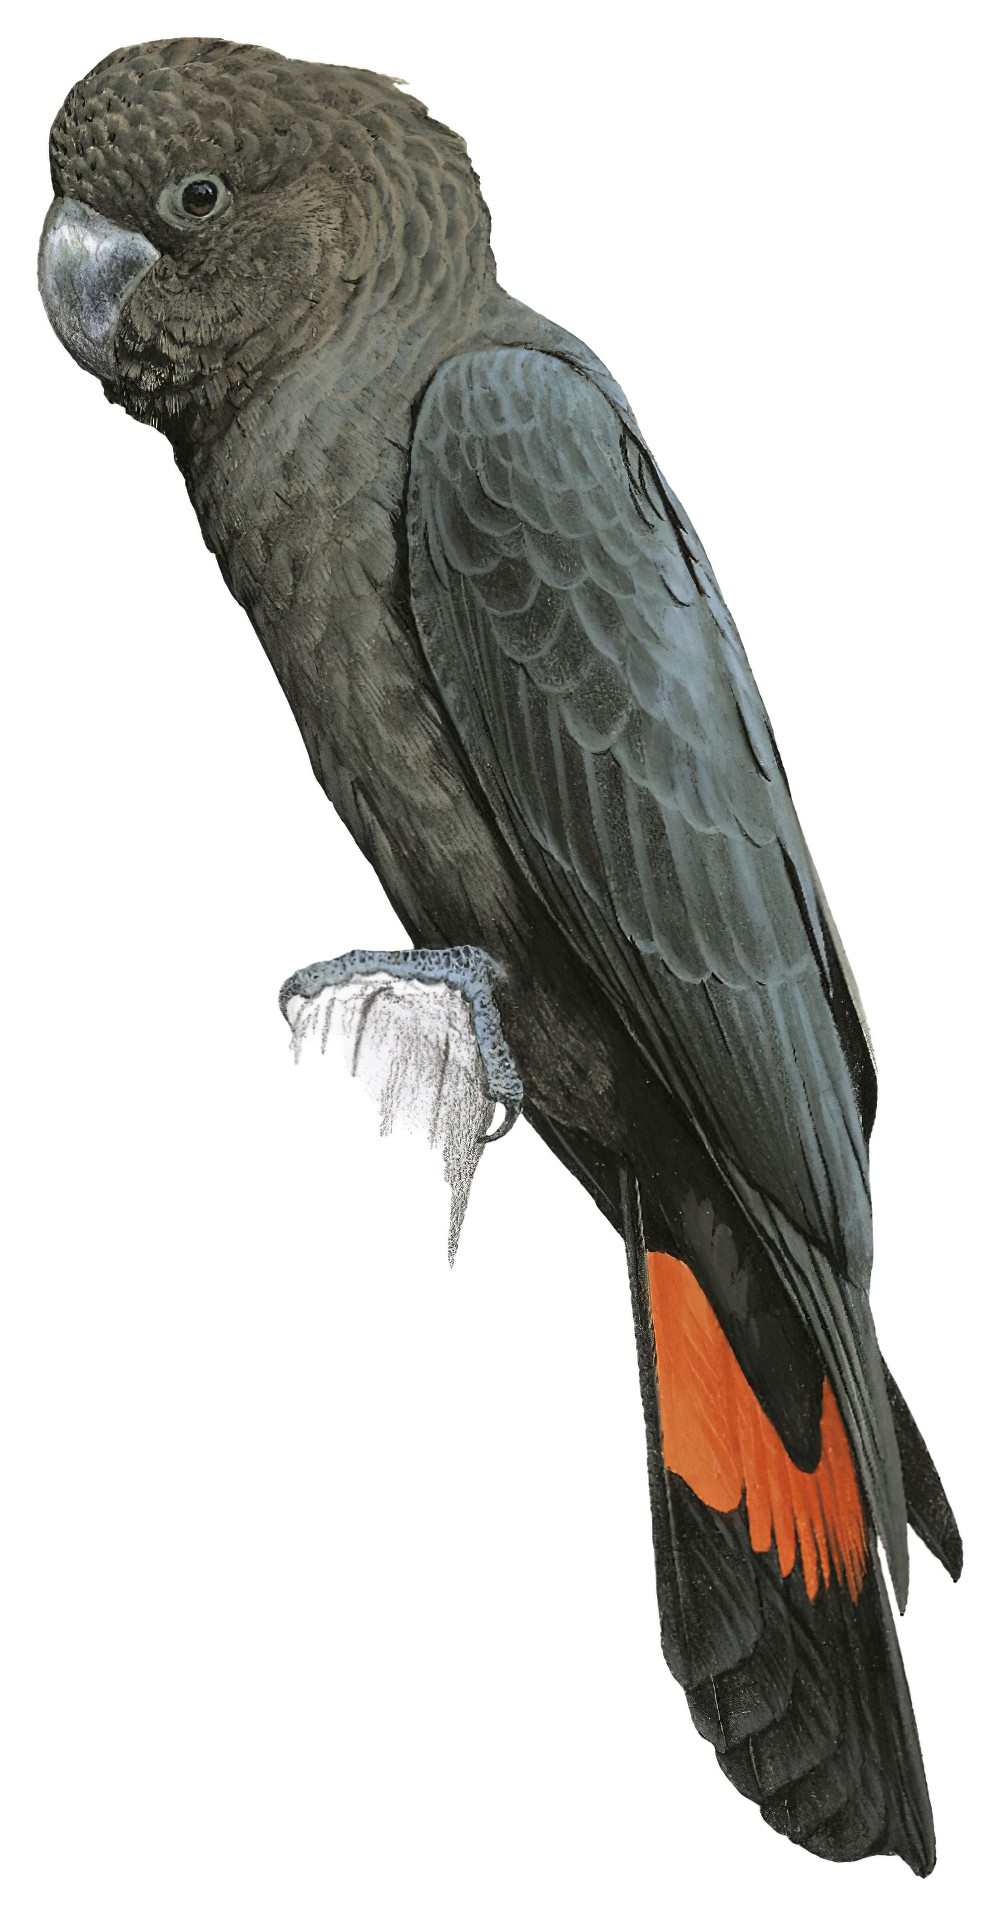 Glossy Black-Cockatoo / Calyptorhynchus lathami